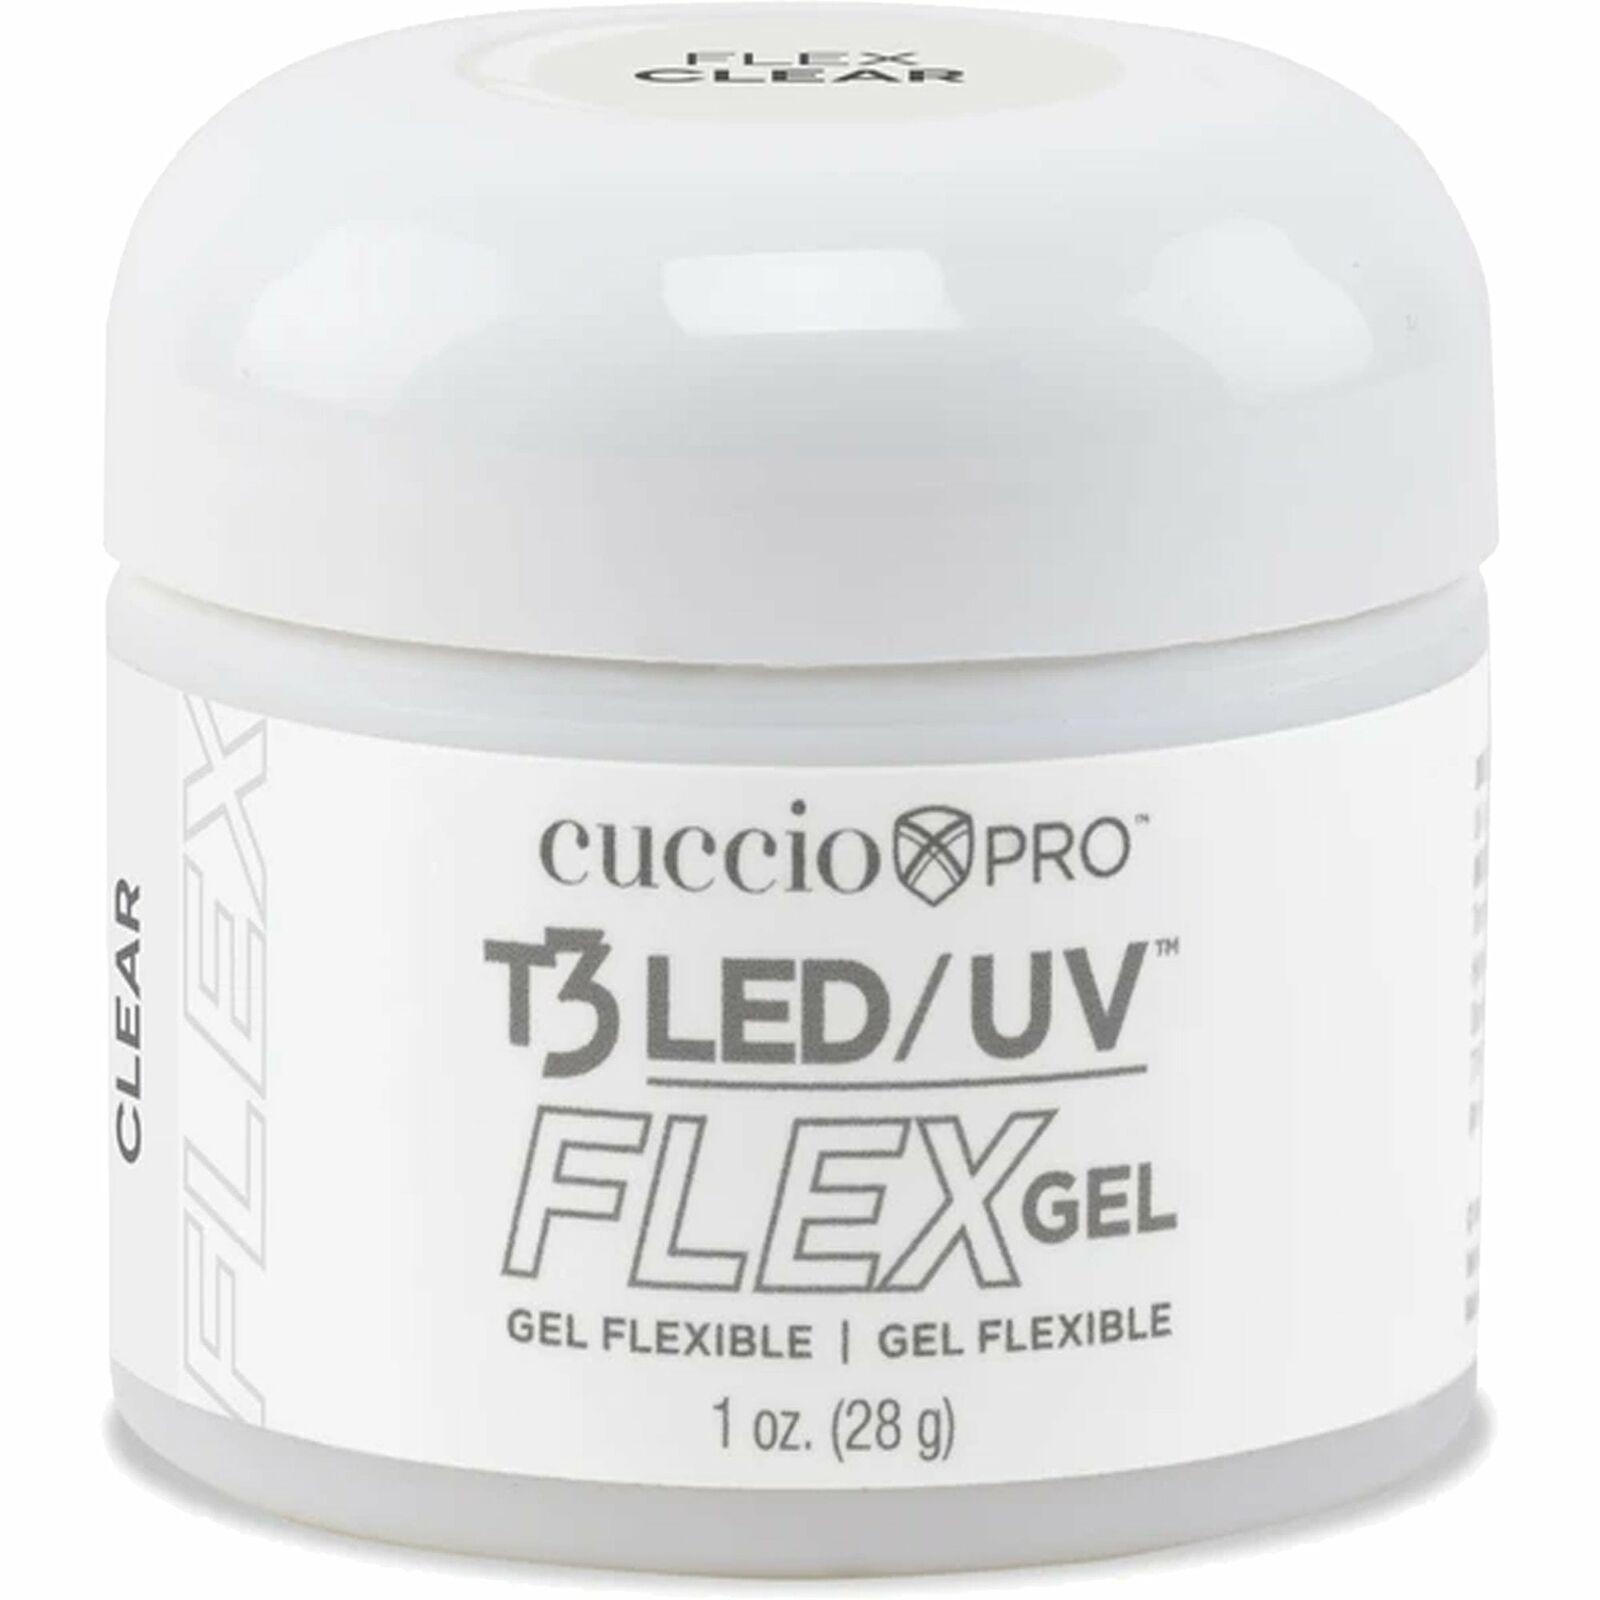 CUCCIO Gradivni gel za izlivanje i nadogradnju noktiju T3 LED/UV Flex Gel Clear 28 g